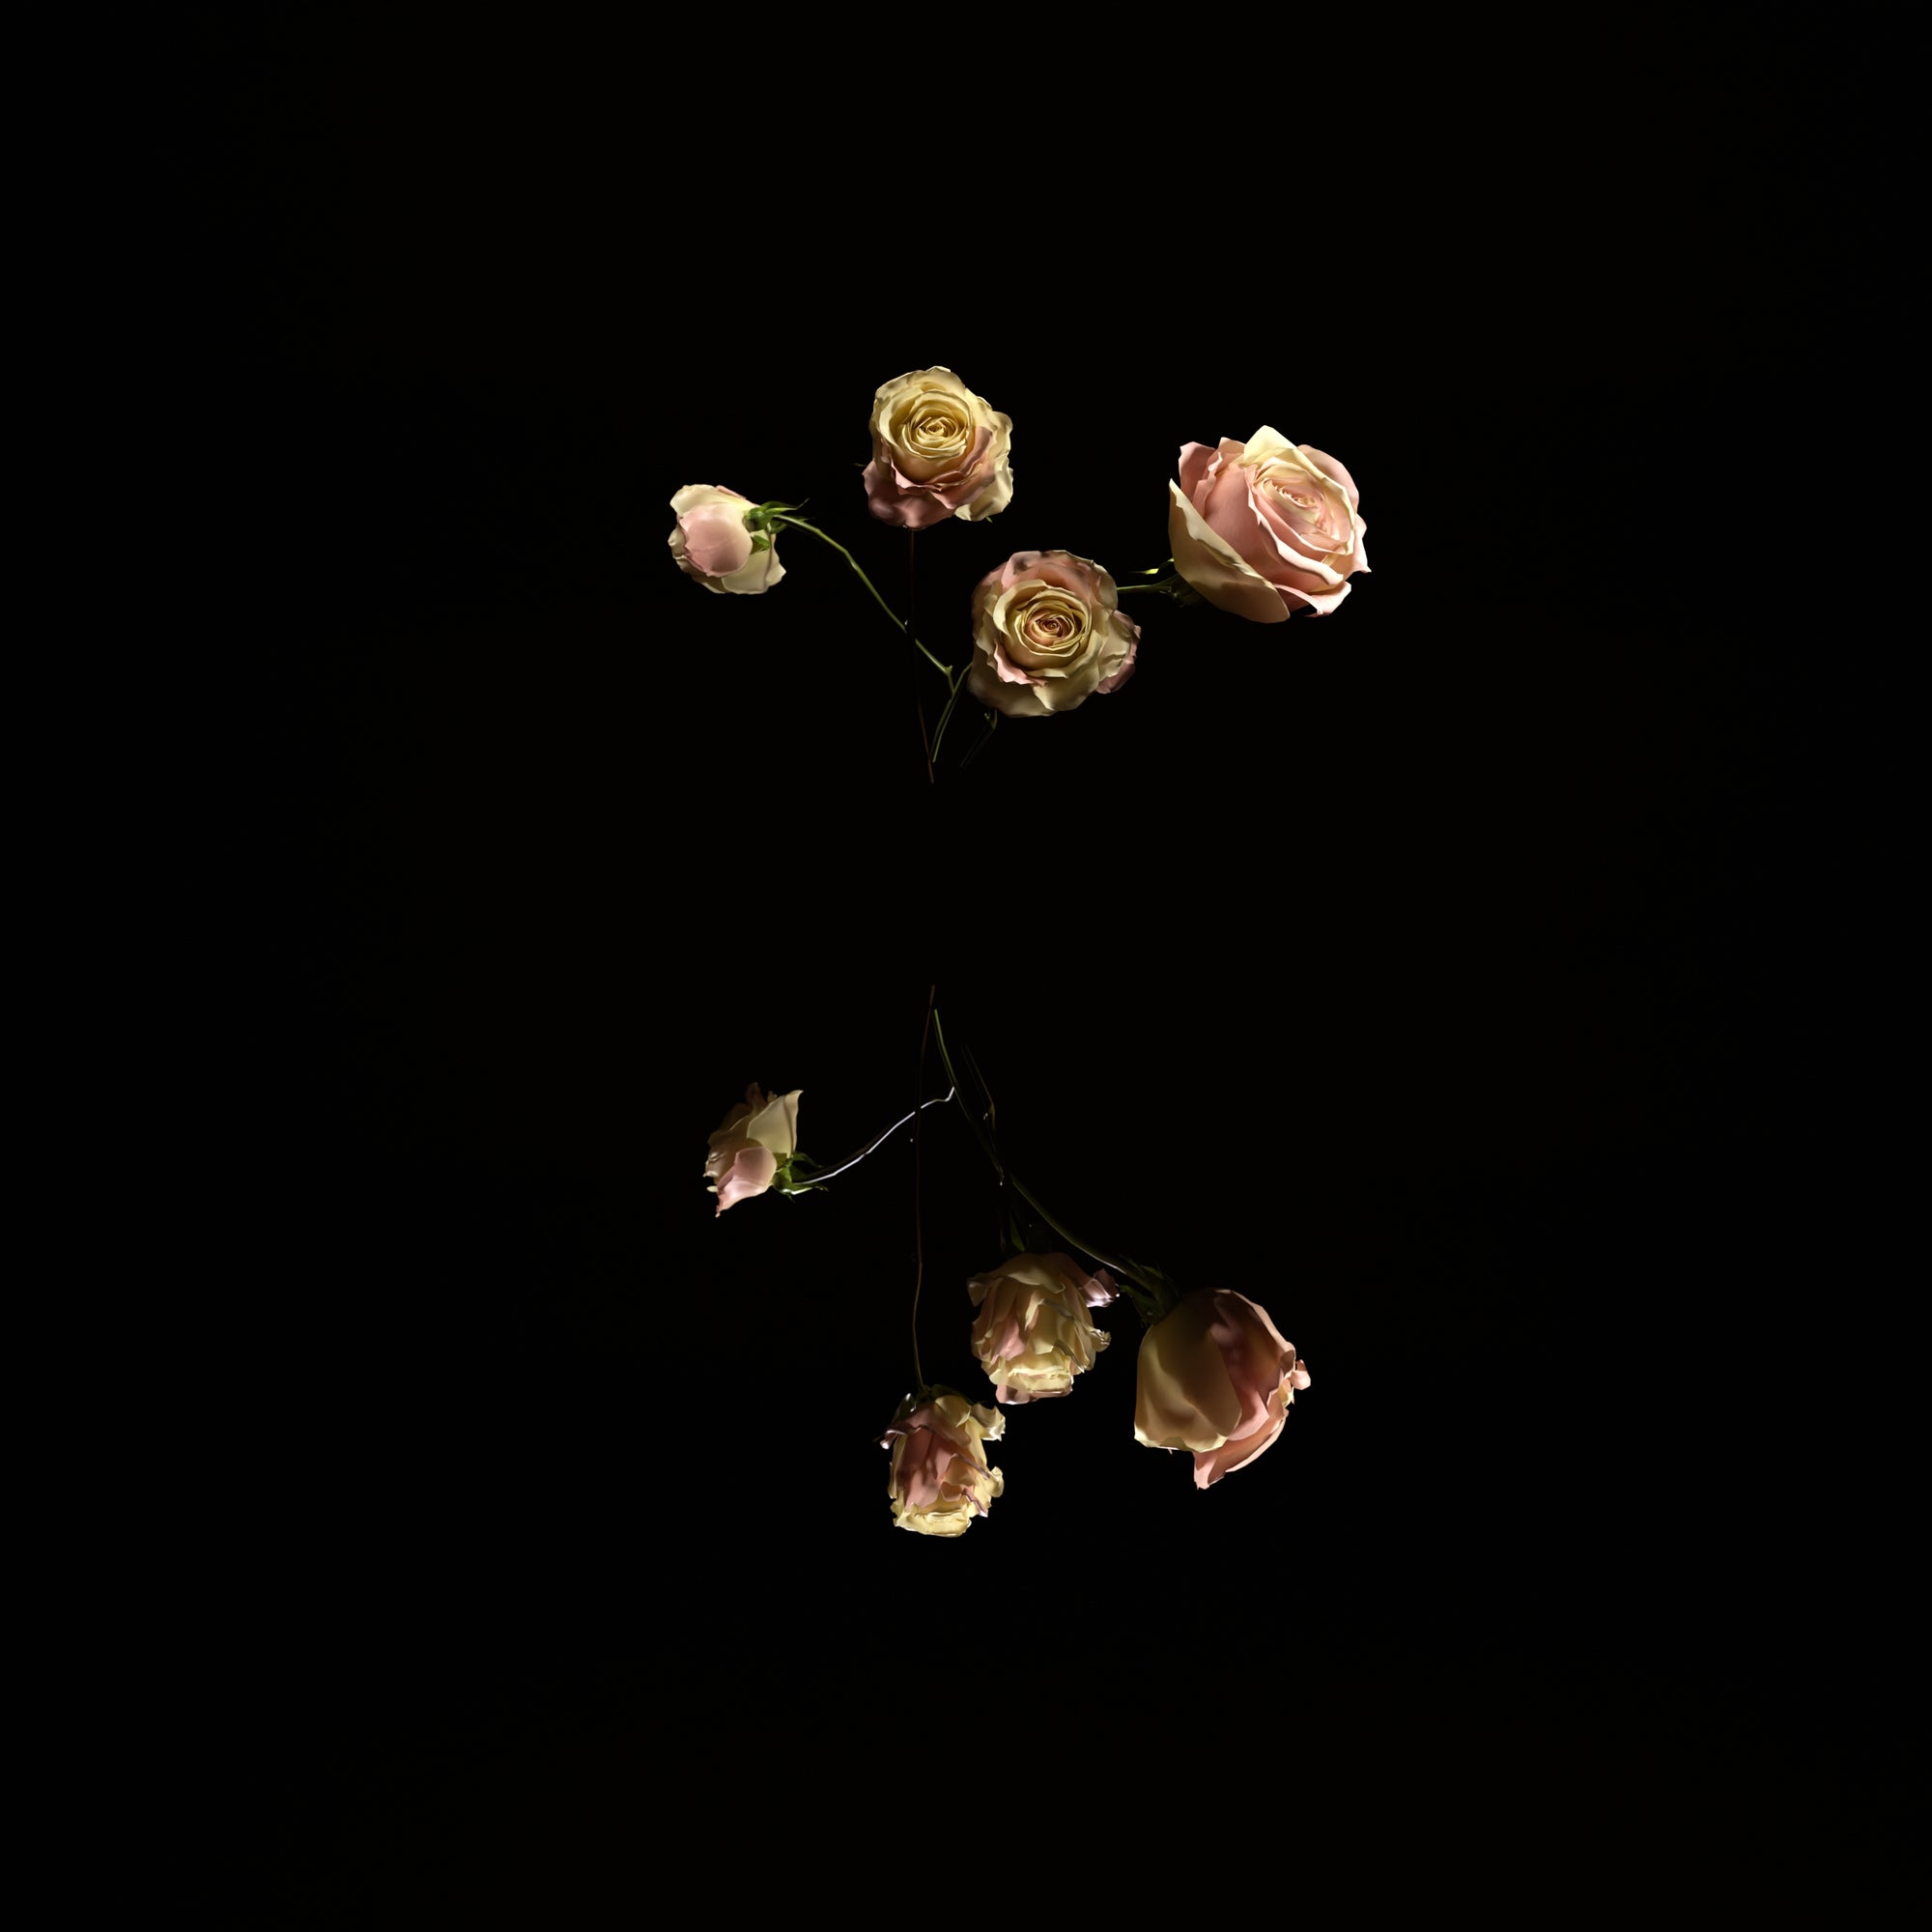 Flowerboy Project Rose Blush in Black Digital Flower